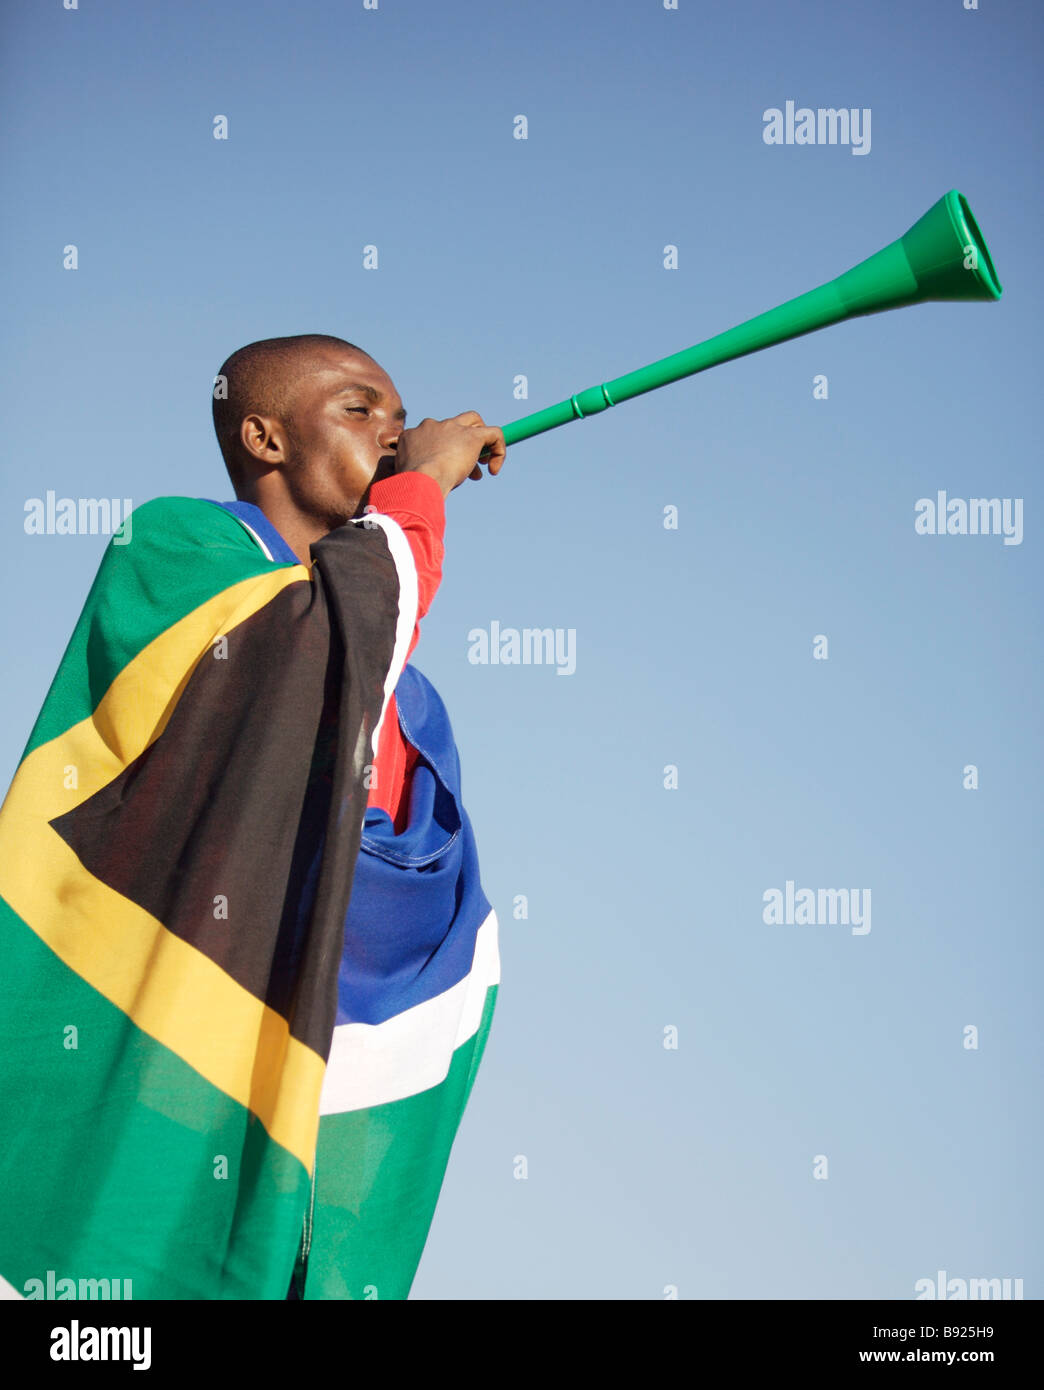 Fußball-Spieler bläst eine Vuvuzela Südafrika Pretoria Provinz Gauteng  Stockfotografie - Alamy